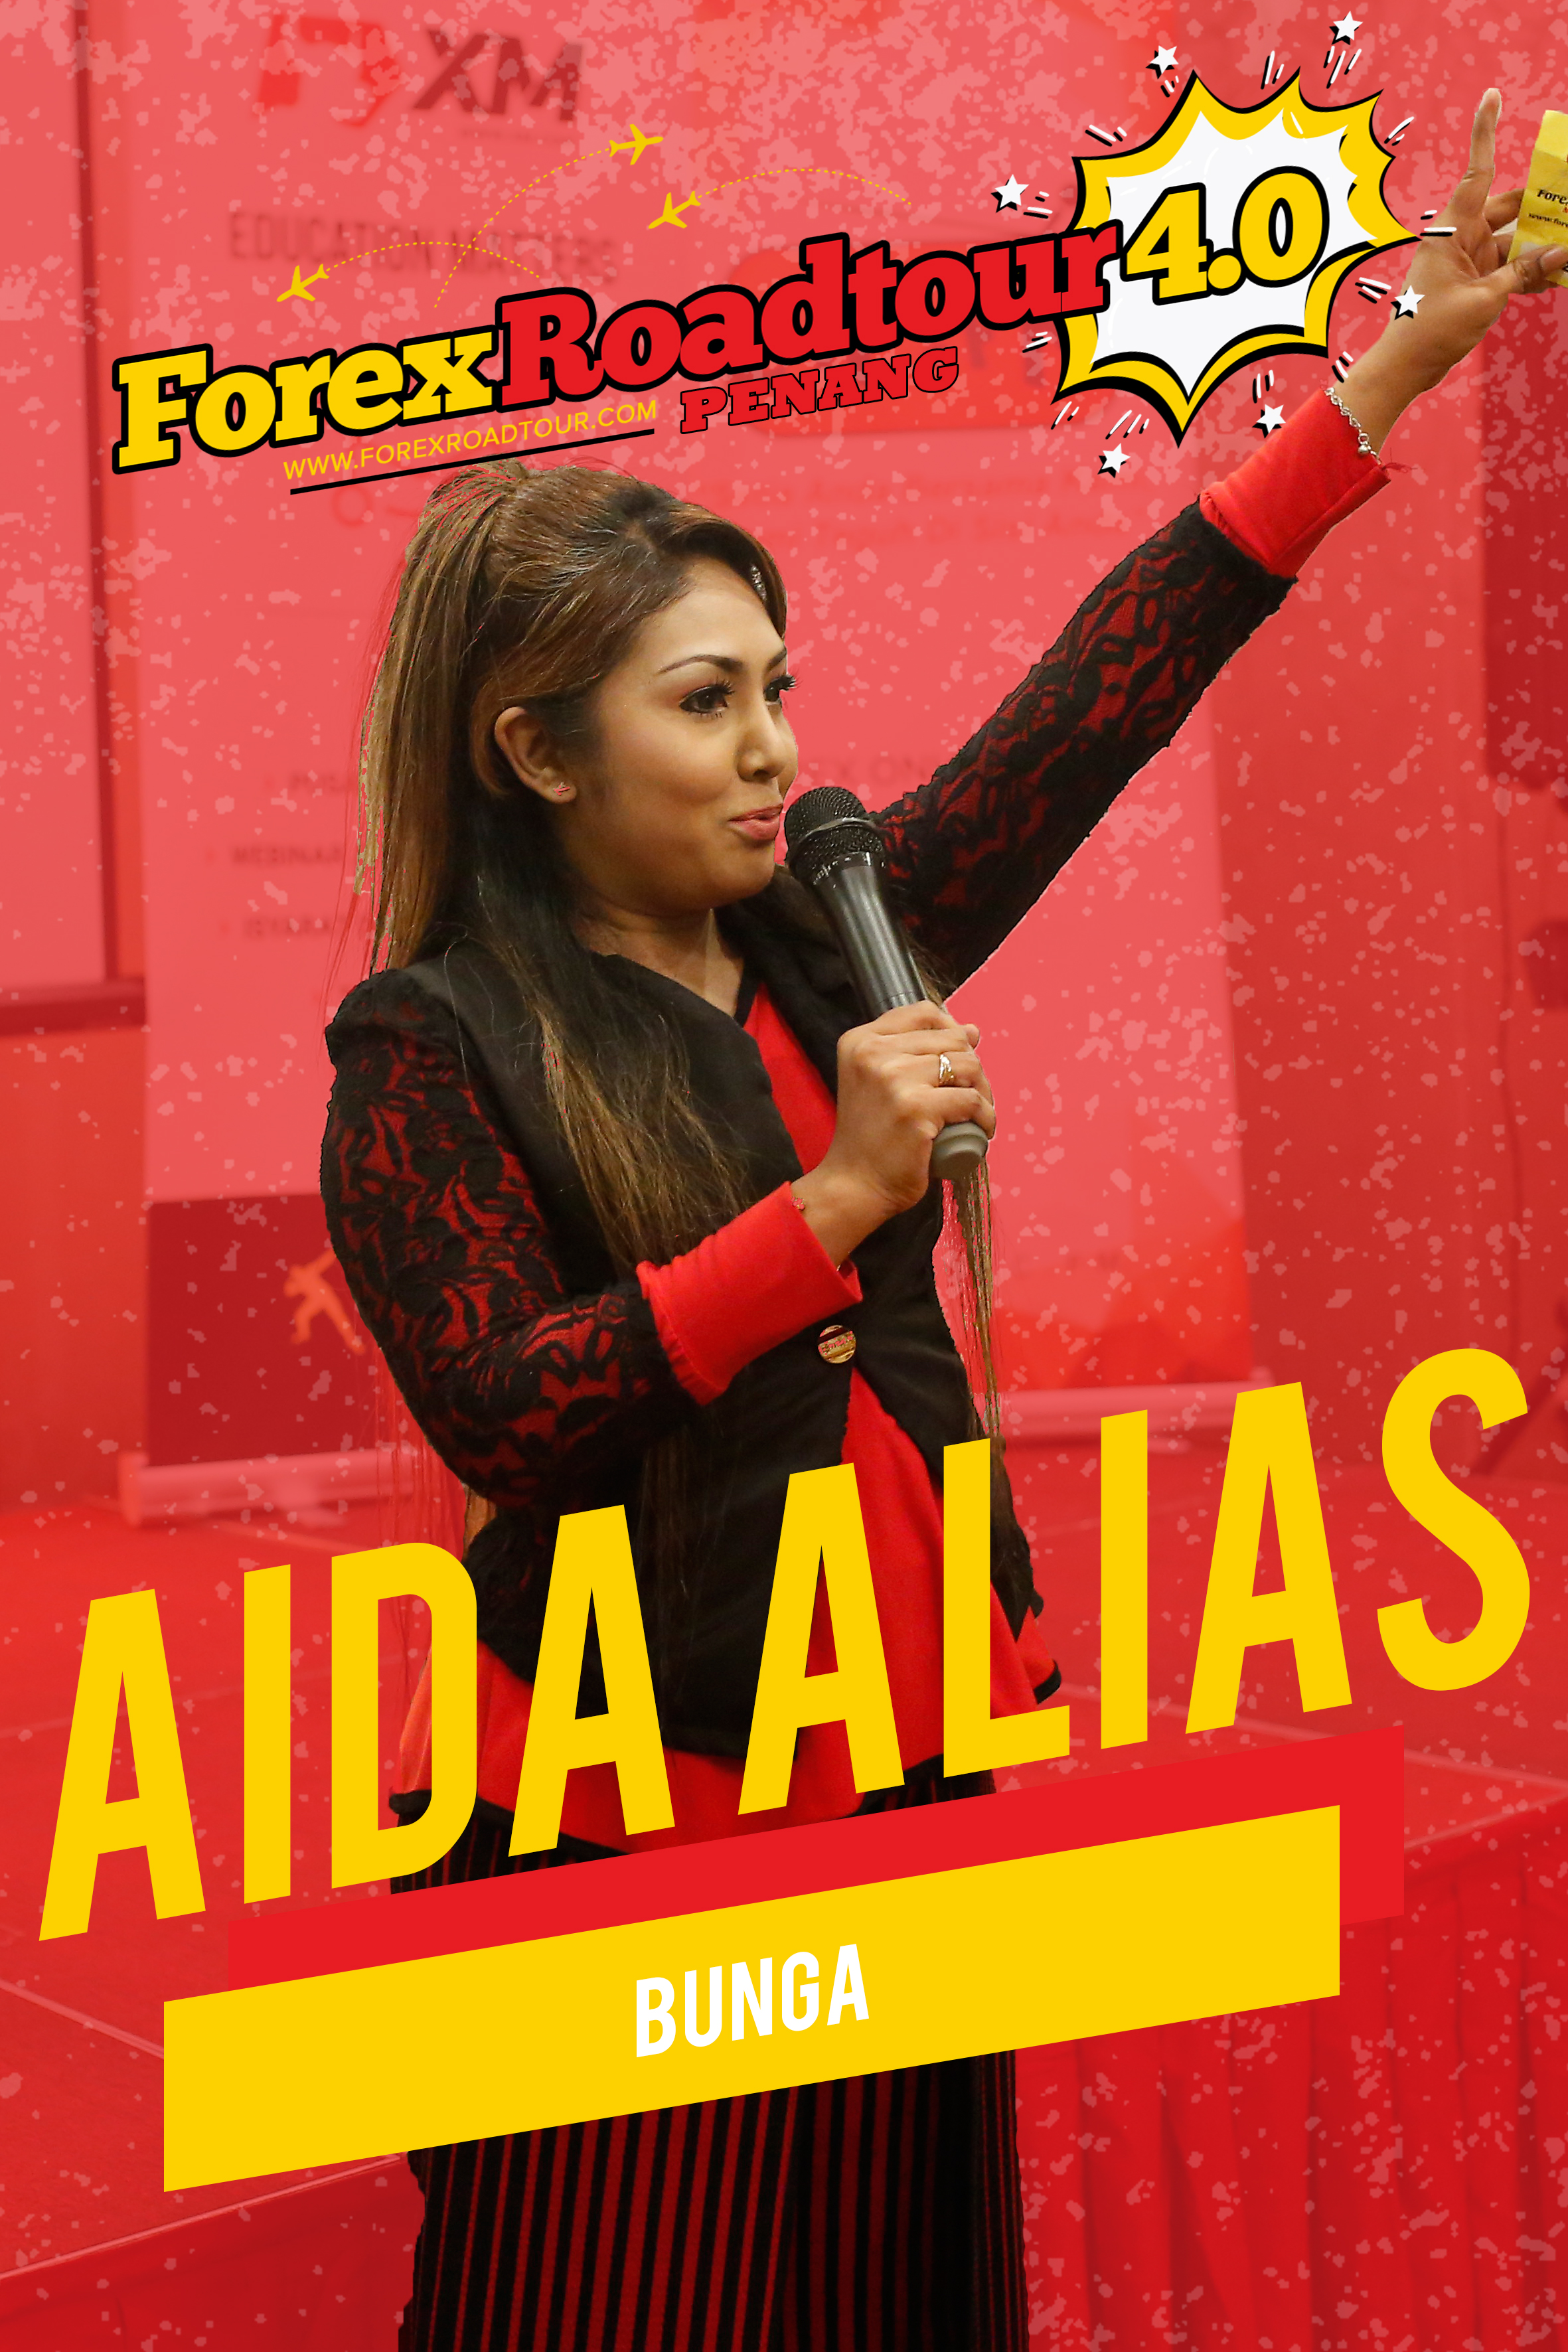 Aida Alias - Bunga [Forex Roadtour 4.0 Penang]